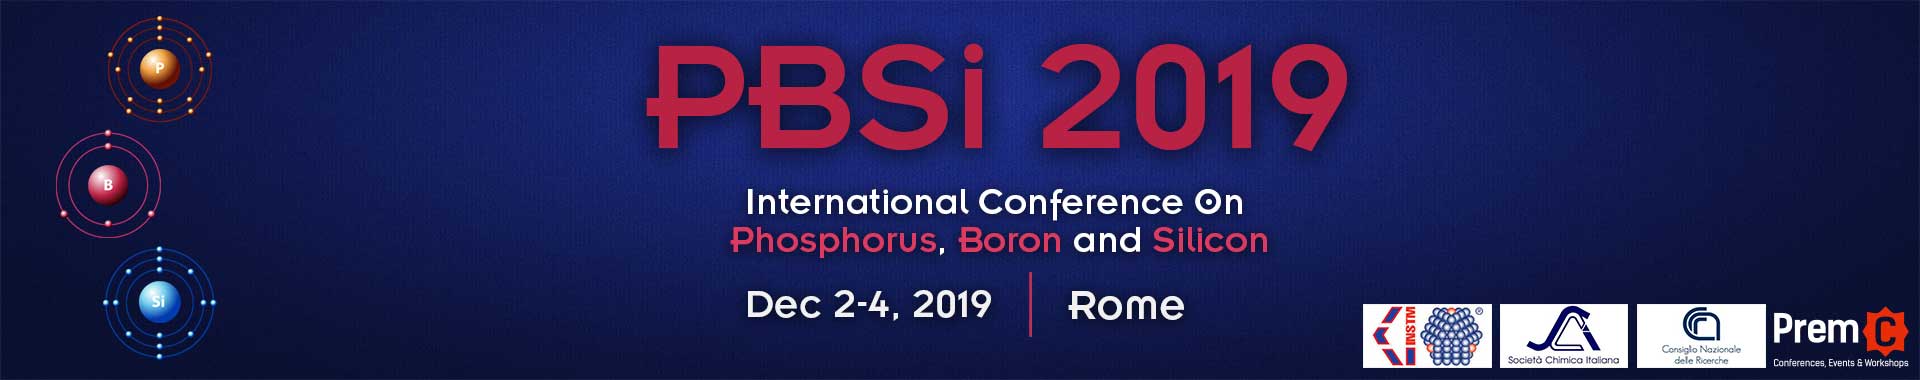 International Conference On Phosphorus, Boron And Silicon - PBSi Banner